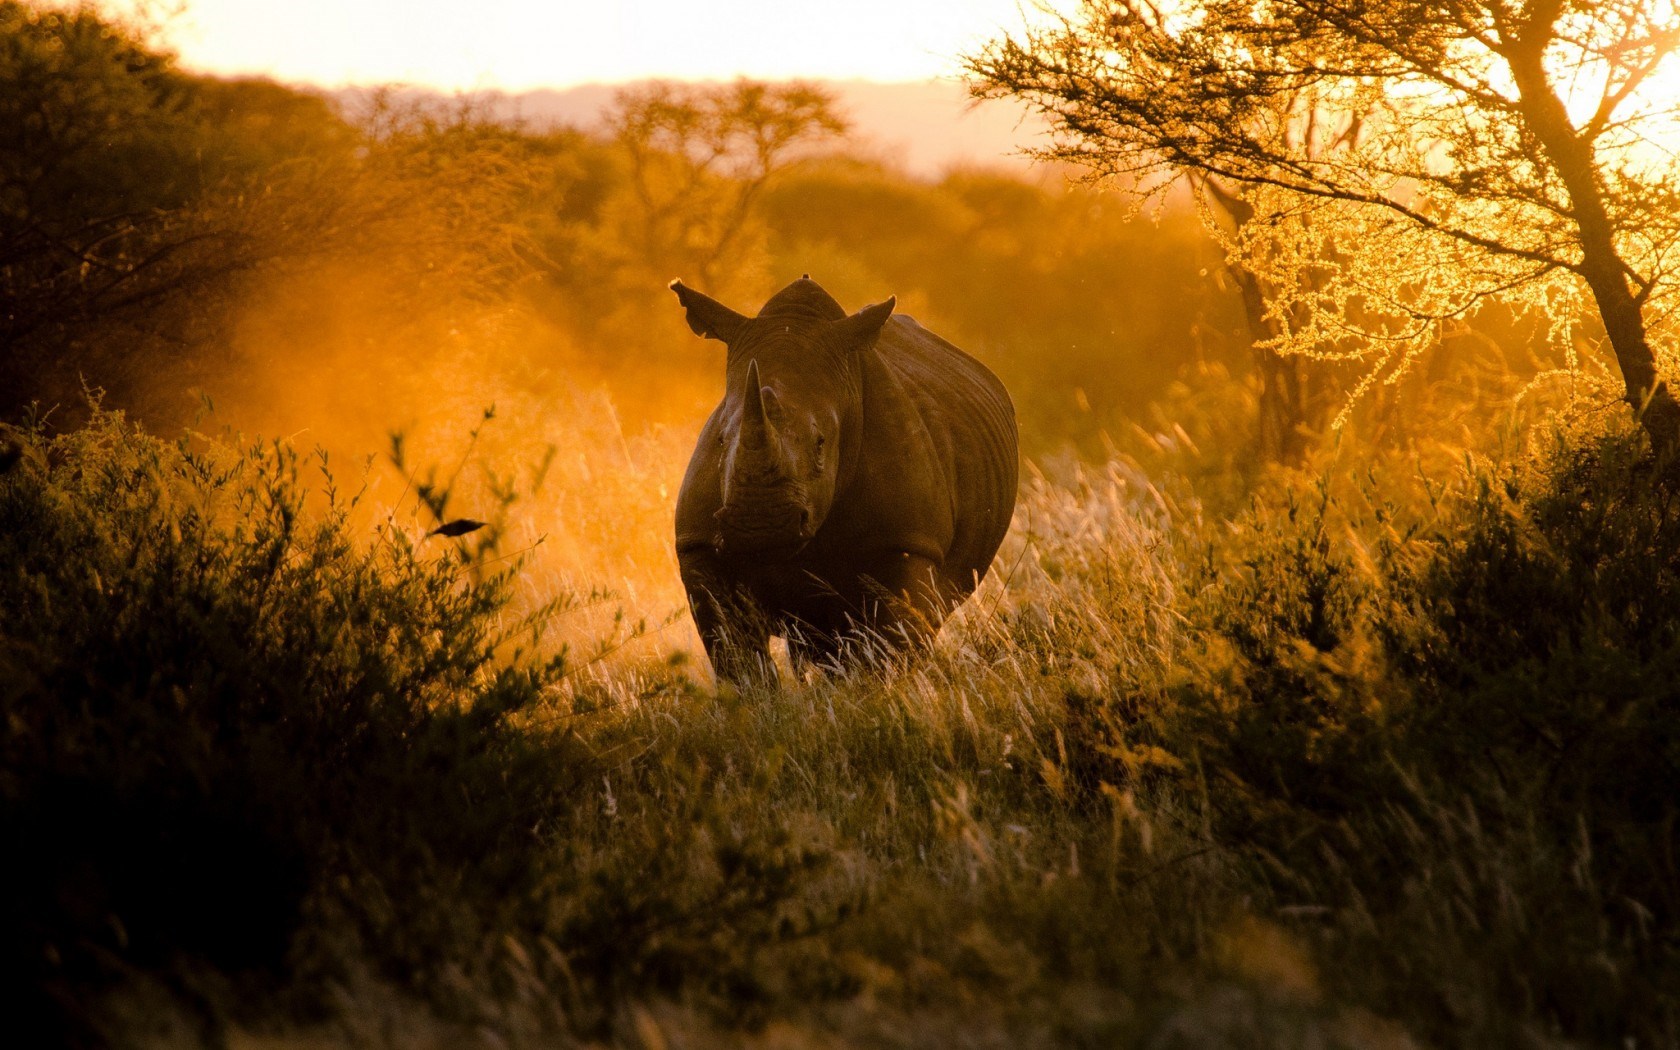 africa wallpaper hd,rinoceronte,natura,rinoceronte nero,rinoceronte bianco,paesaggio naturale